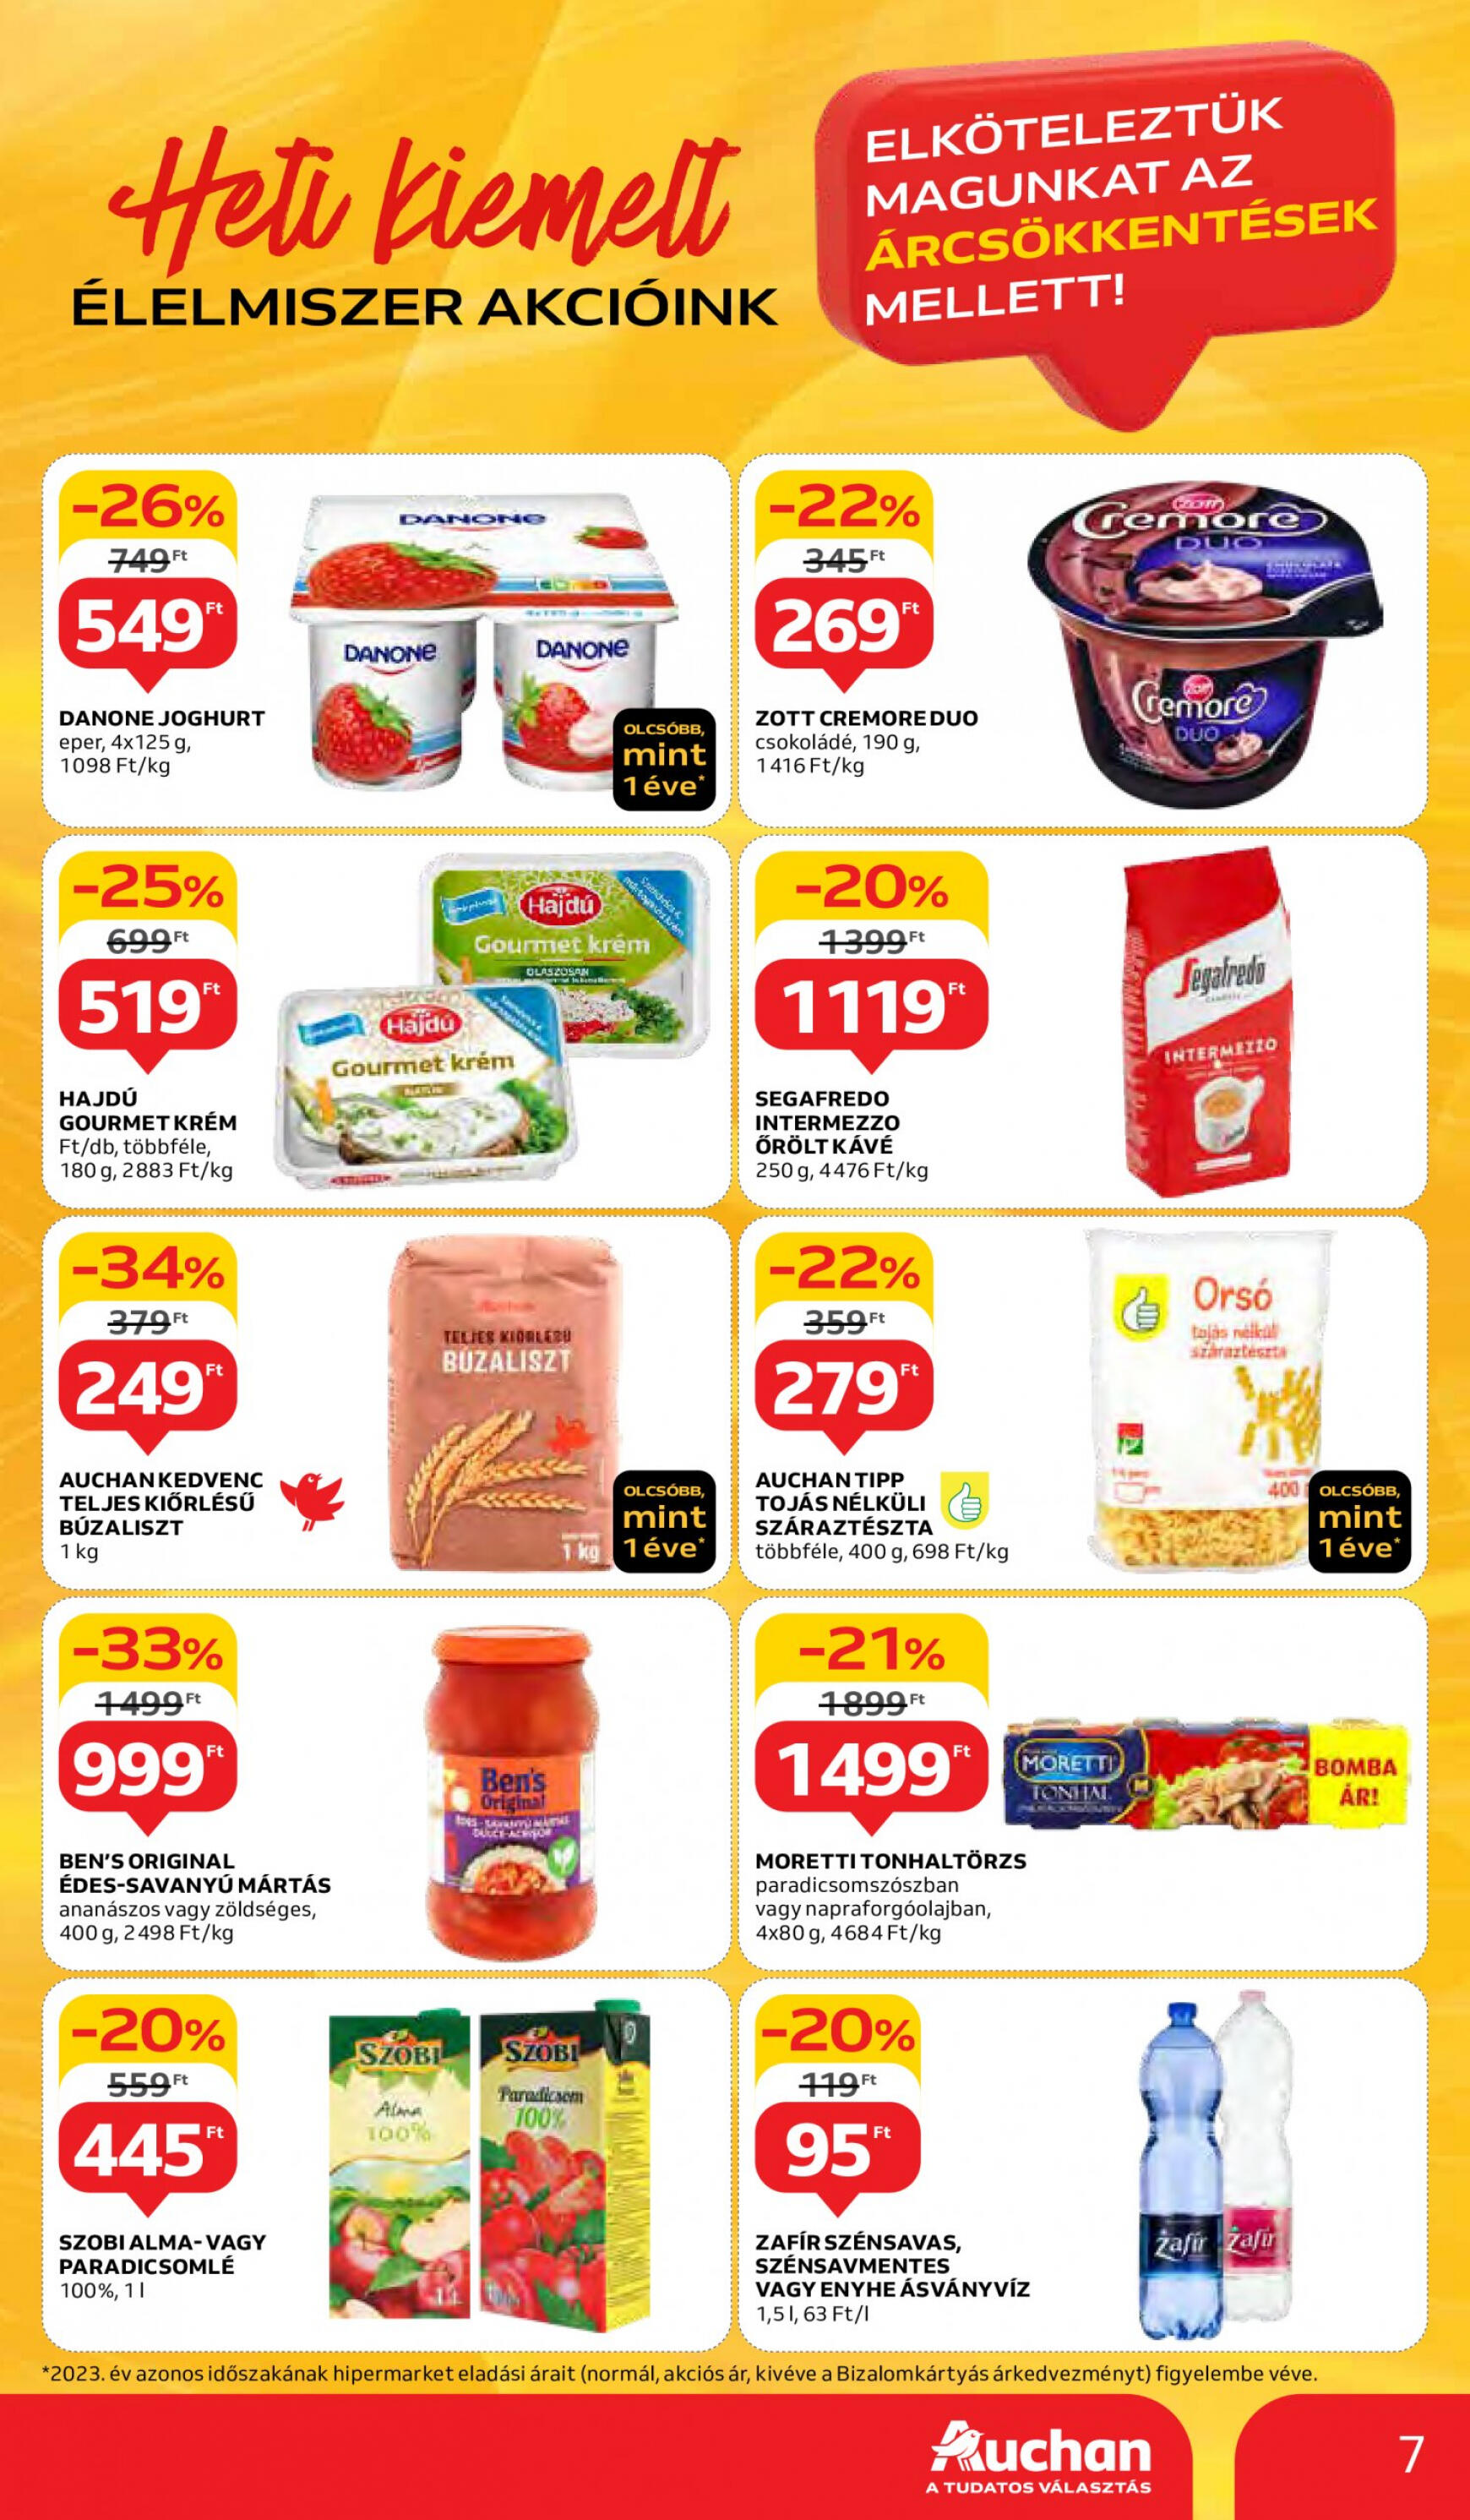 auchan - Aktuális újság Auchan 05.02. - 05.08. - page: 7